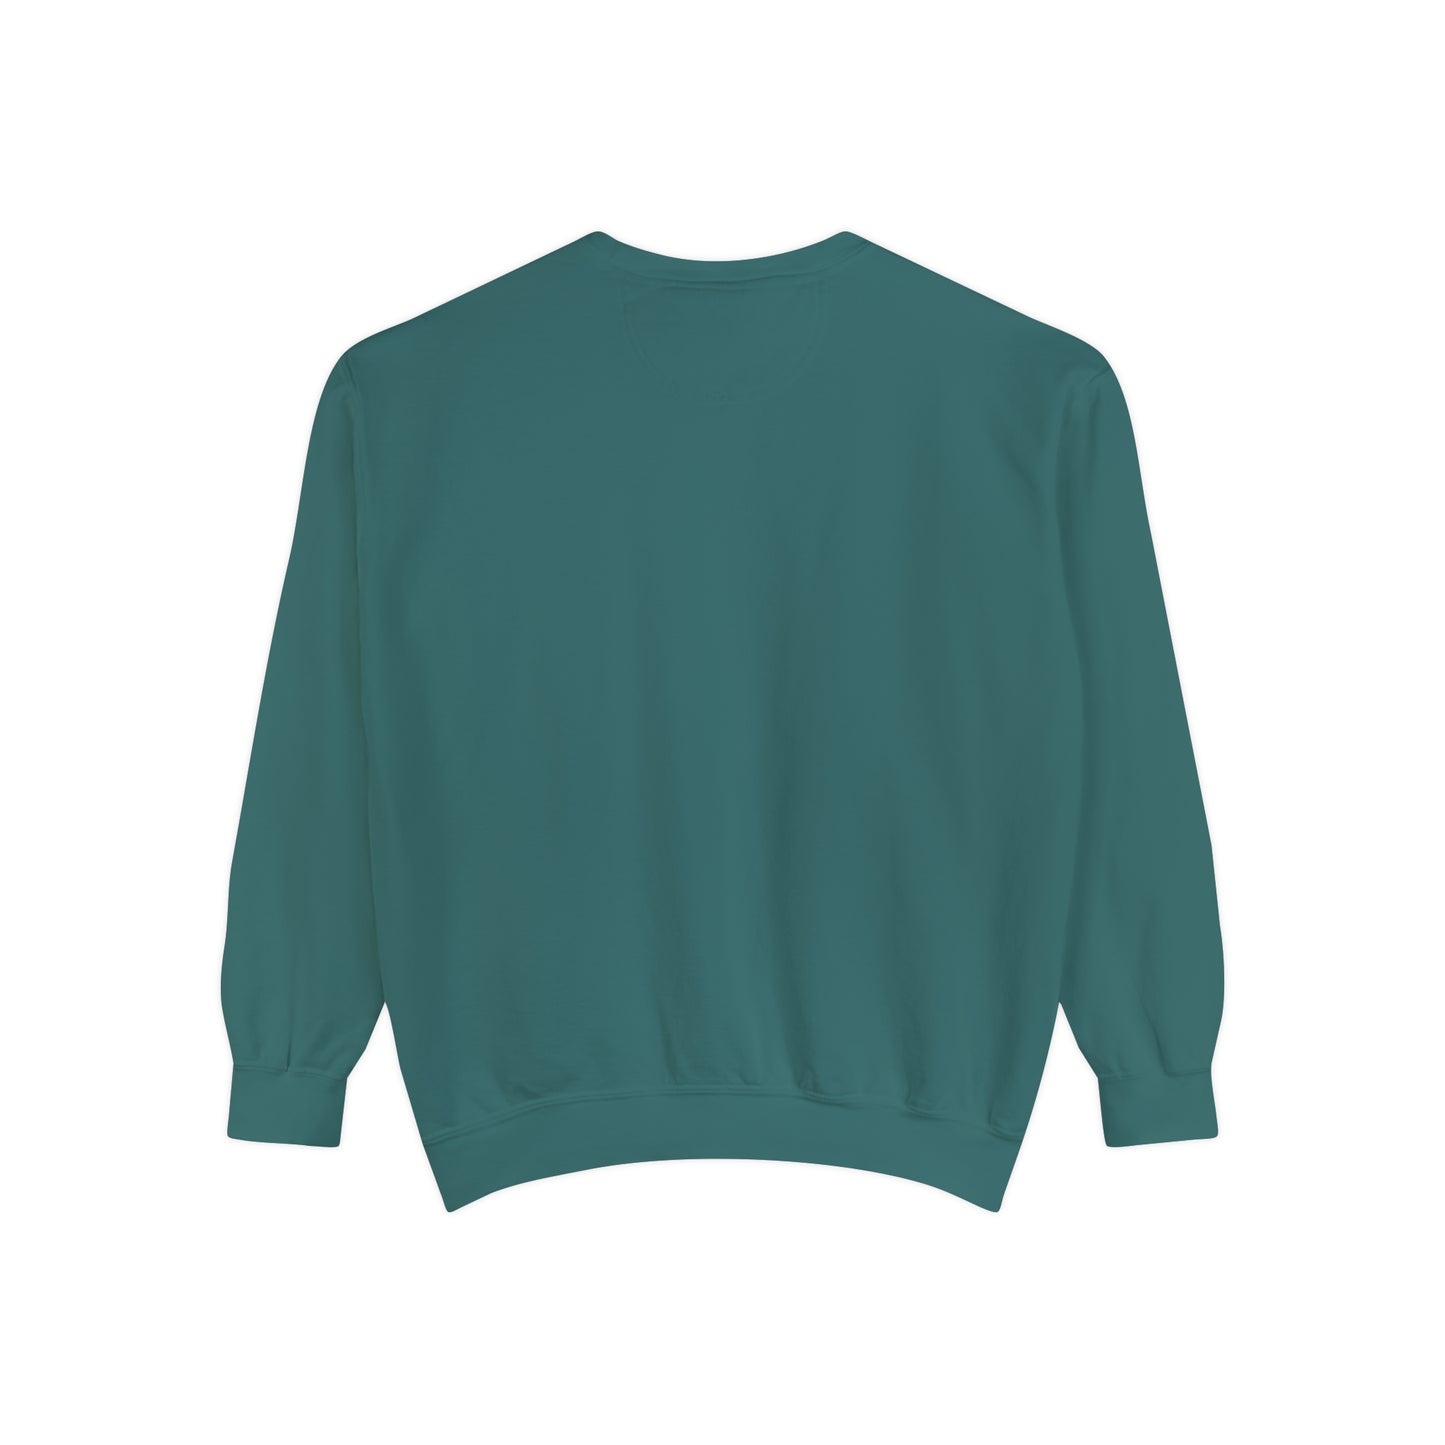 Unisex Sweatshirt 6 Grey Pinetree